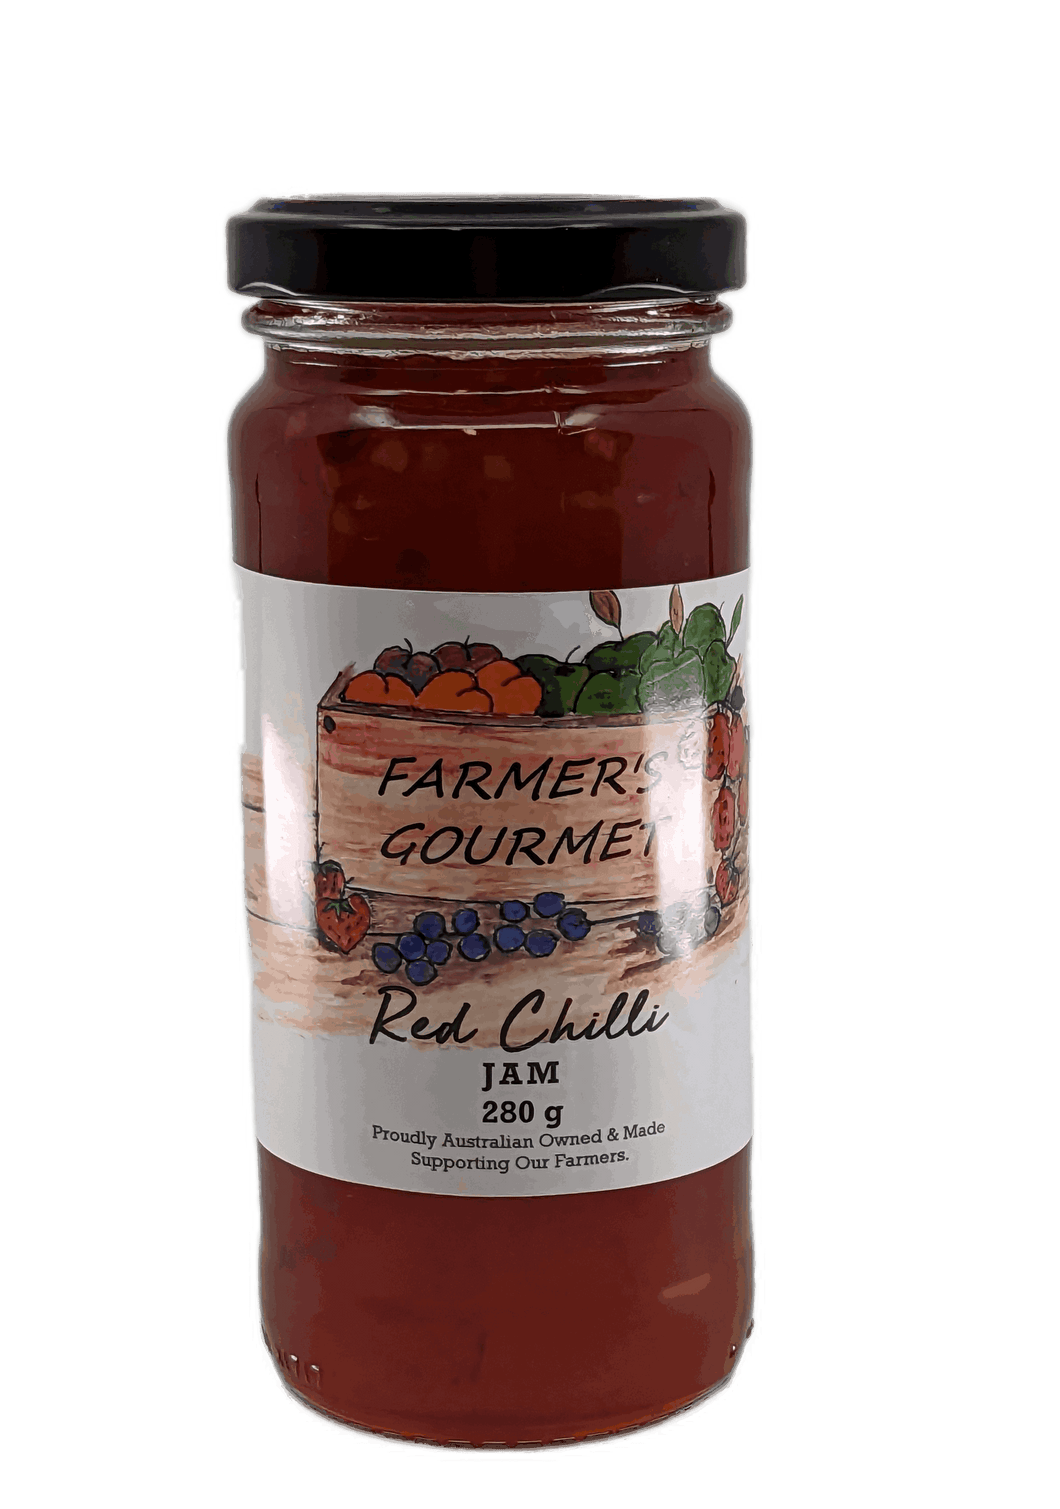 Farmers Gourmet Red Chilli Jam 280g